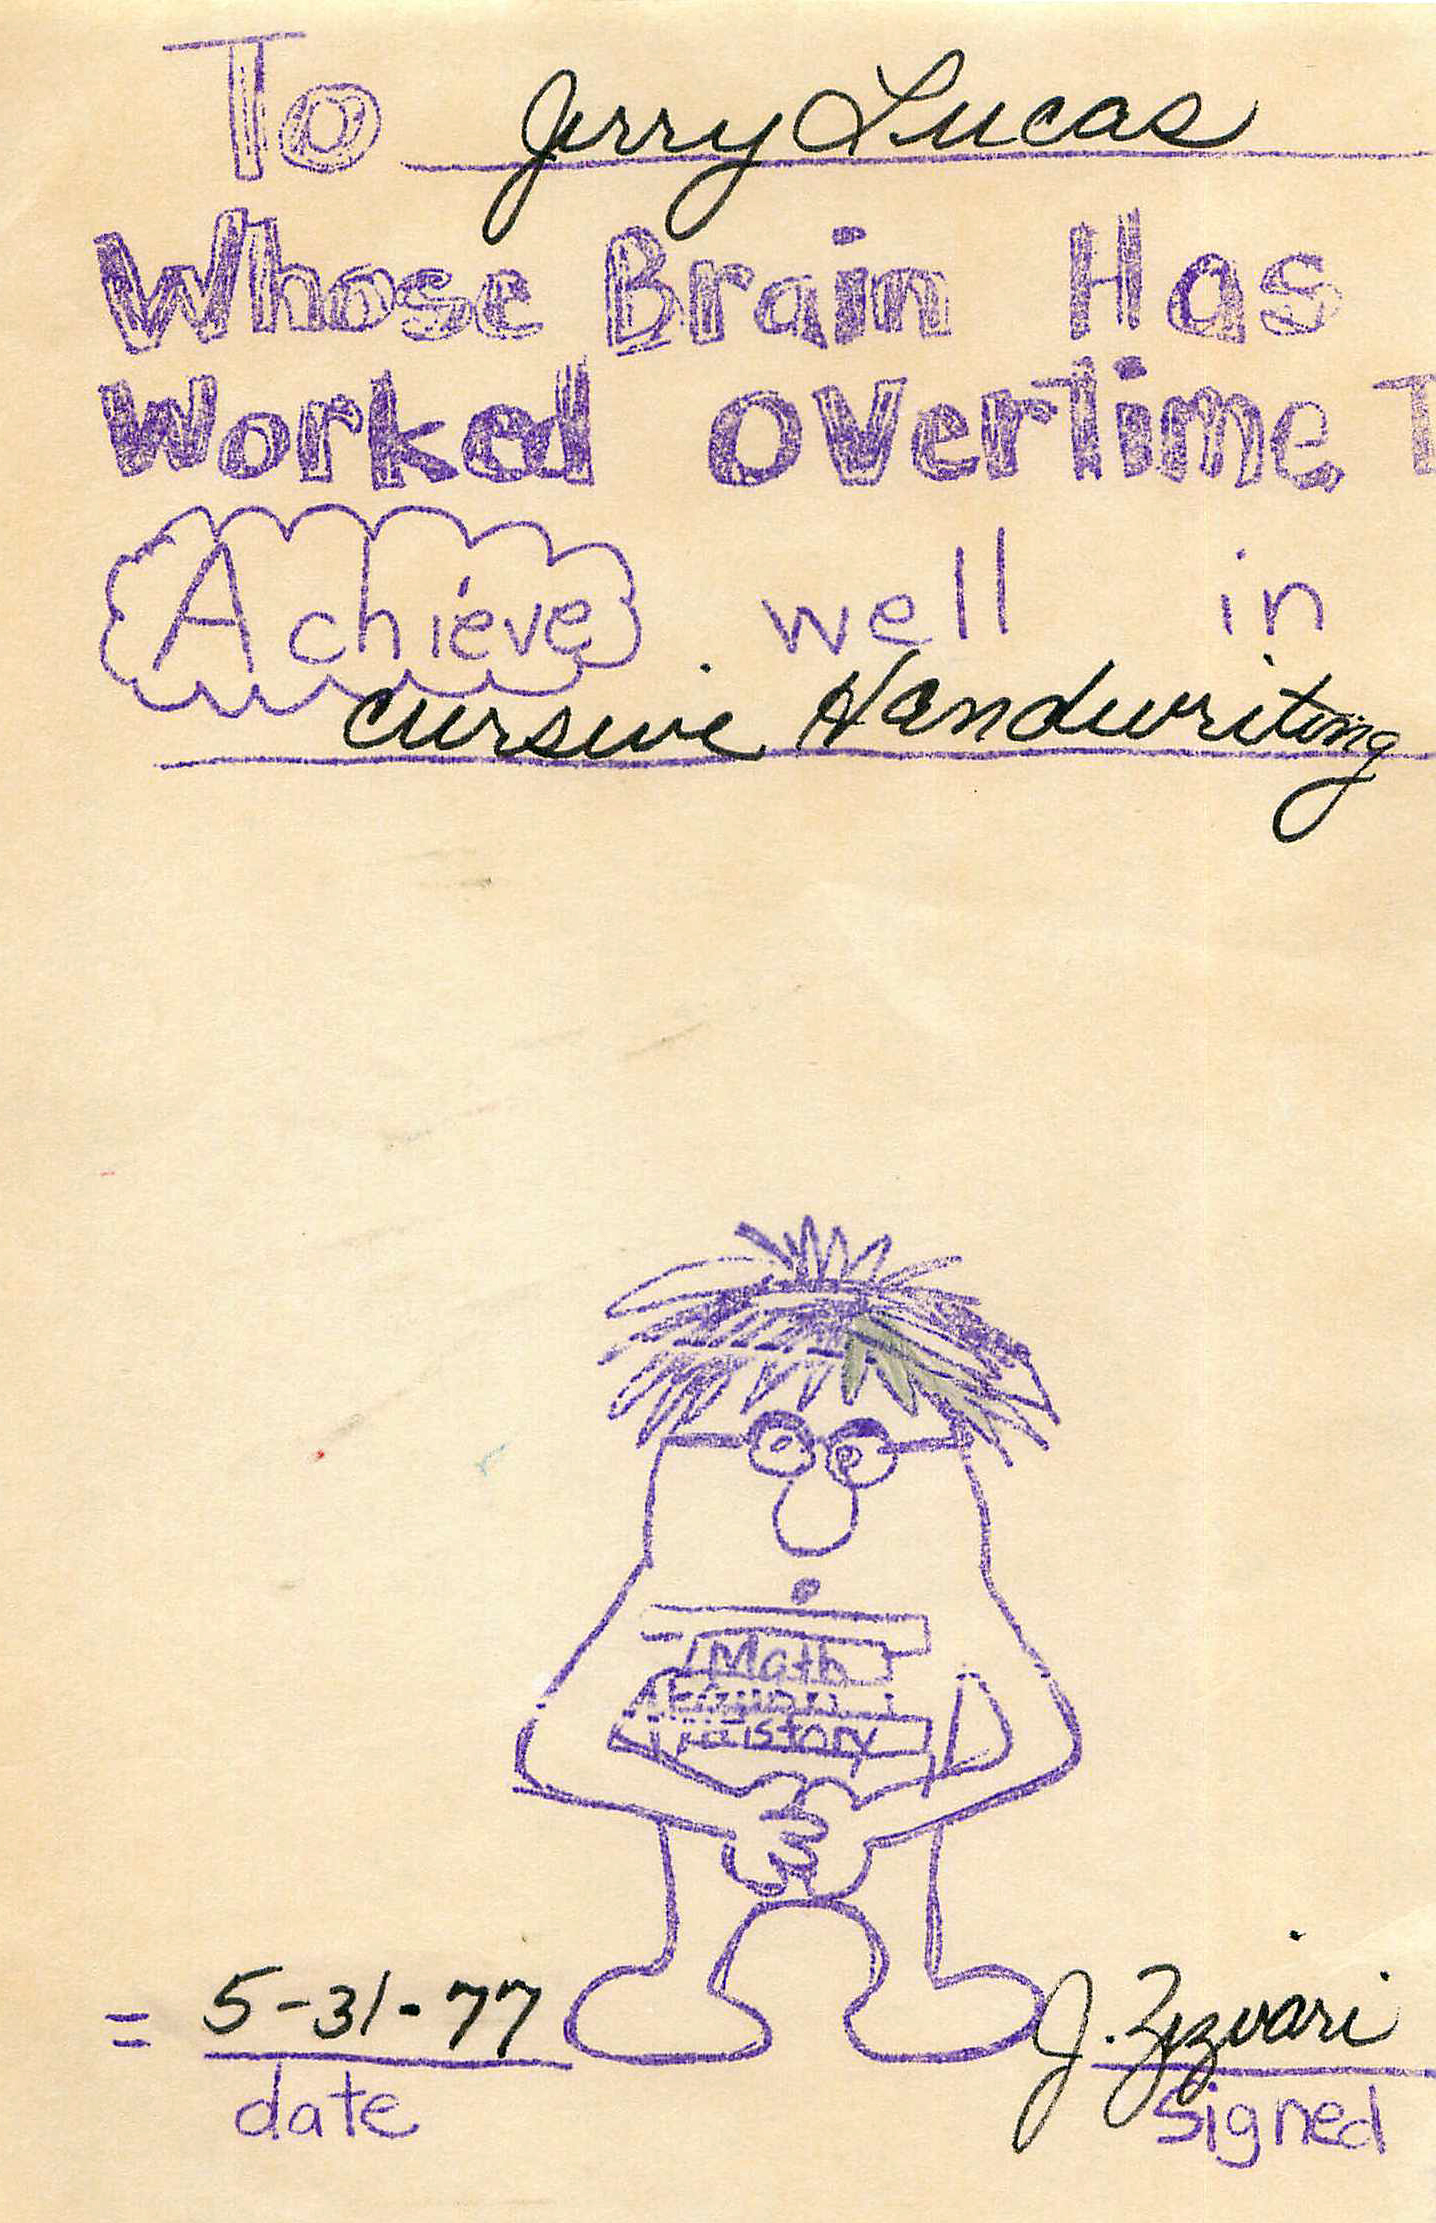 19770531 Handwriting Recognition.jpg